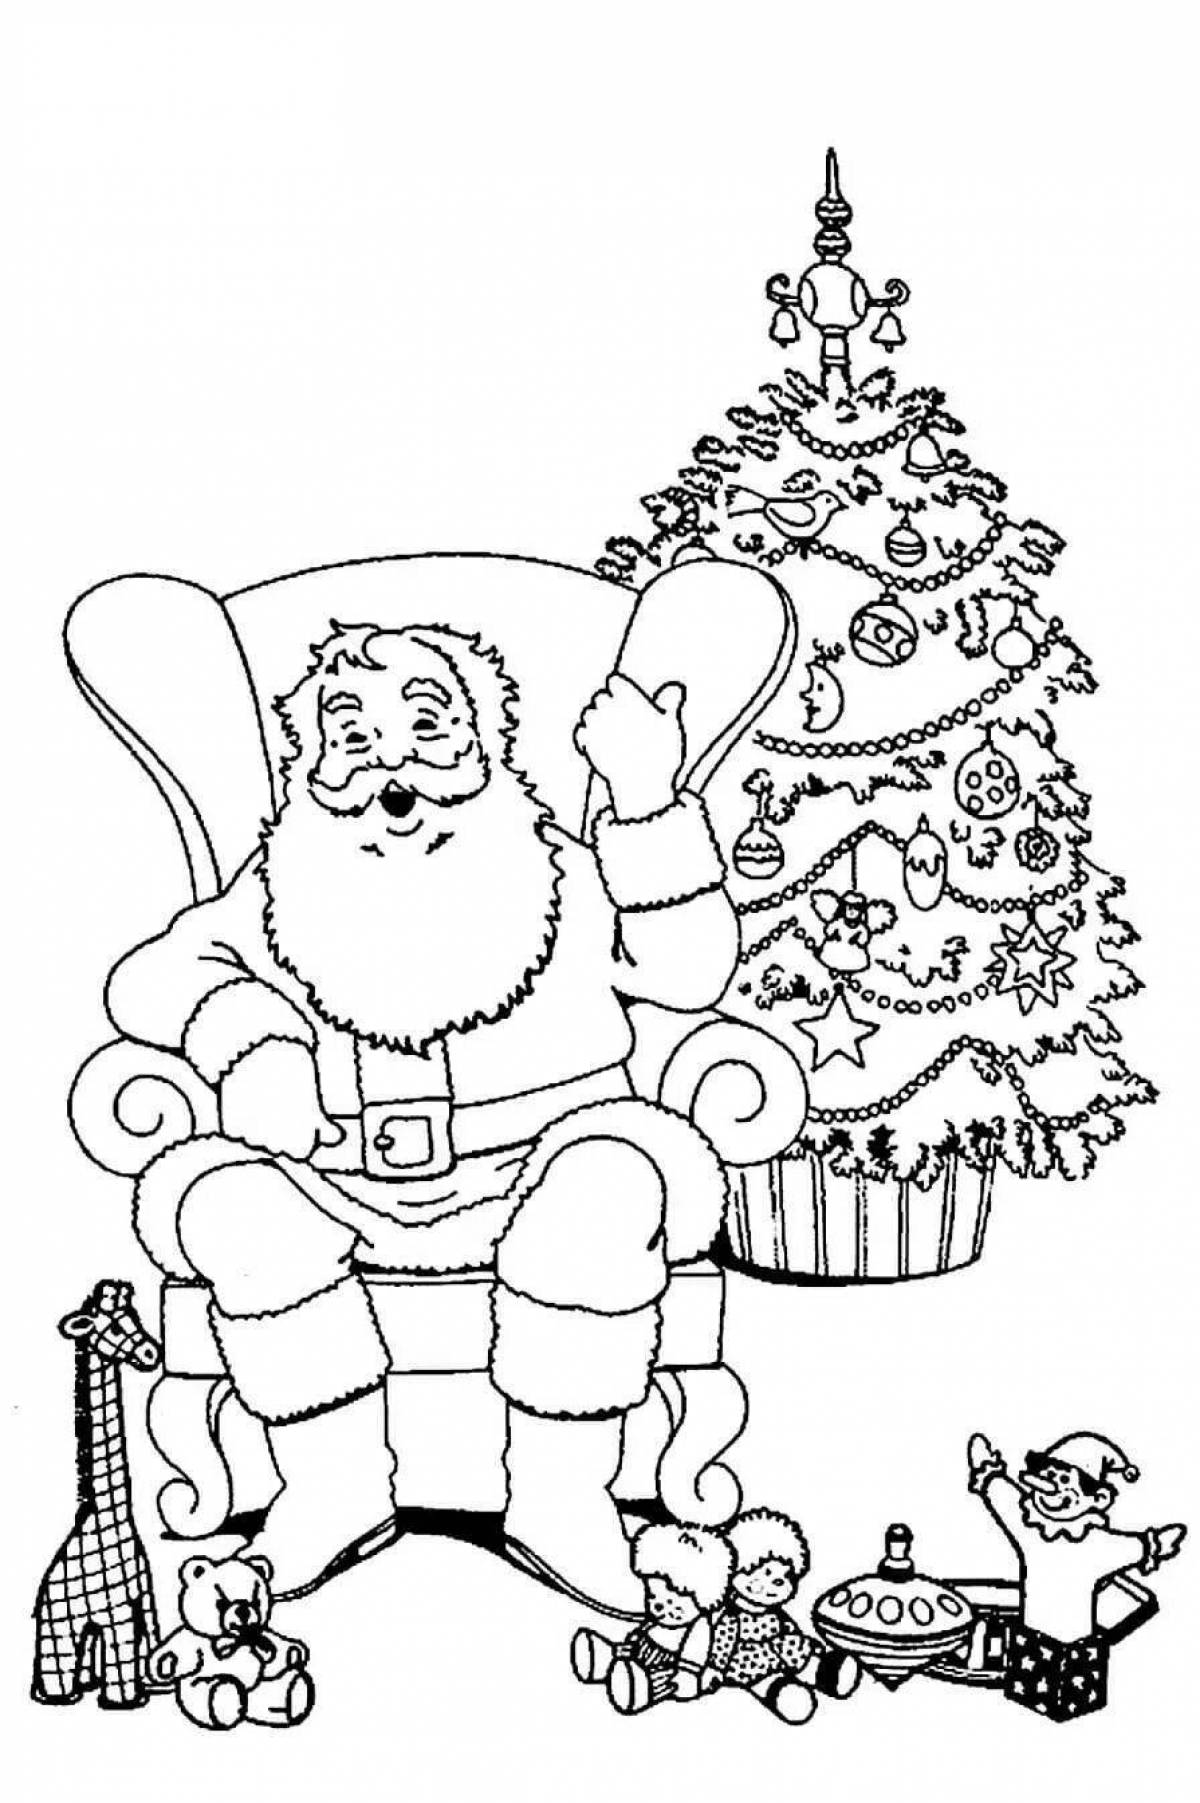 Funny santa claus coloring book for kids